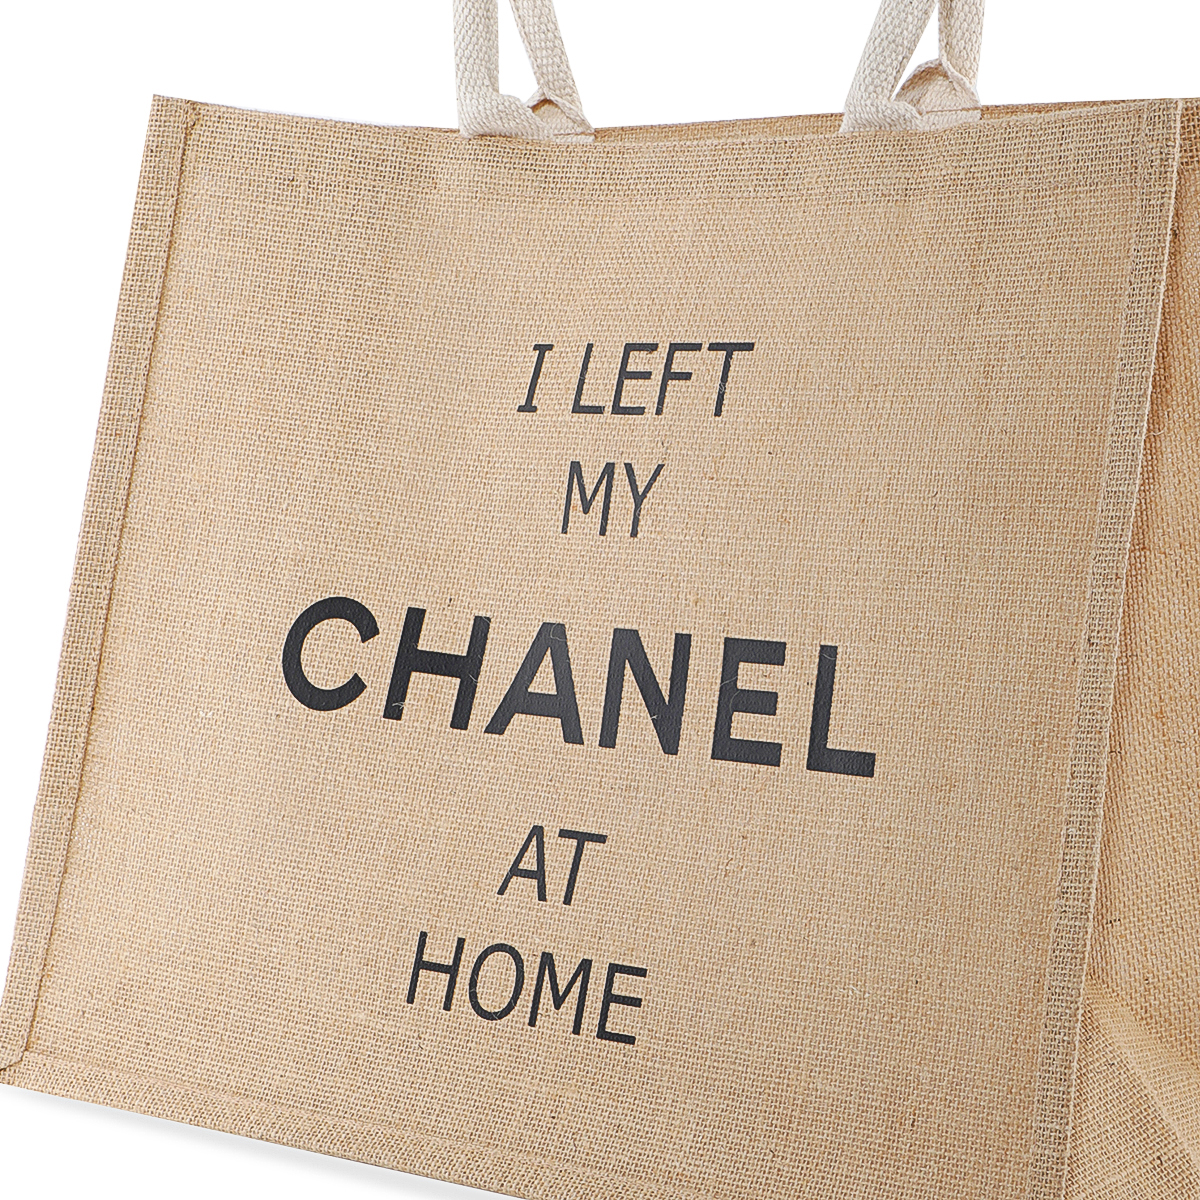 Buy Large Handmade Weaving Shoulder Bag Chanel - Beige Online in Kuwait